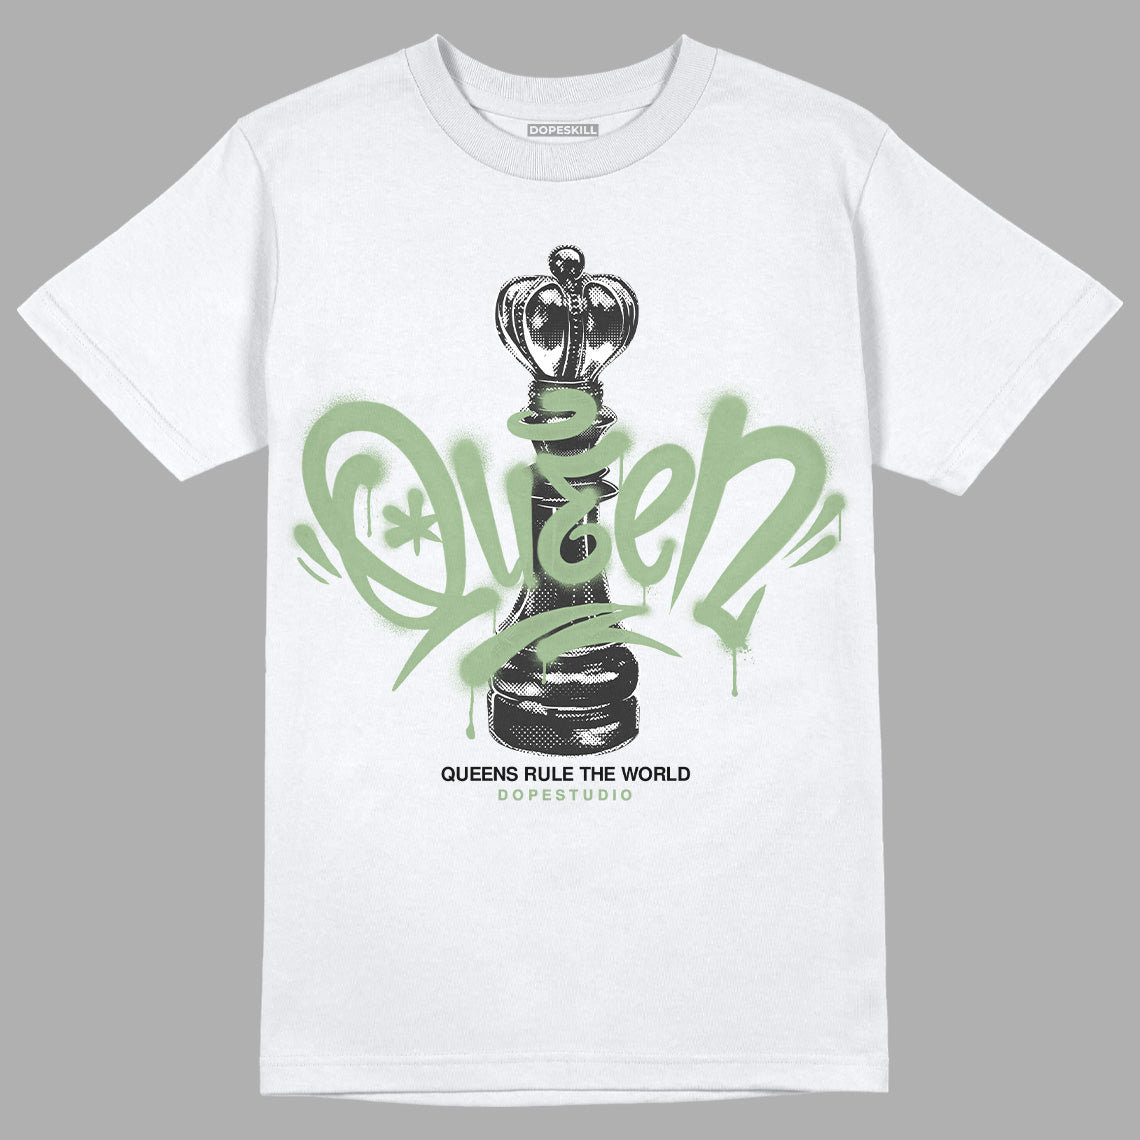 Jordan 4 Retro “Seafoam” DopeSkill T-Shirt Queen Chess Graphic Streetwear - White